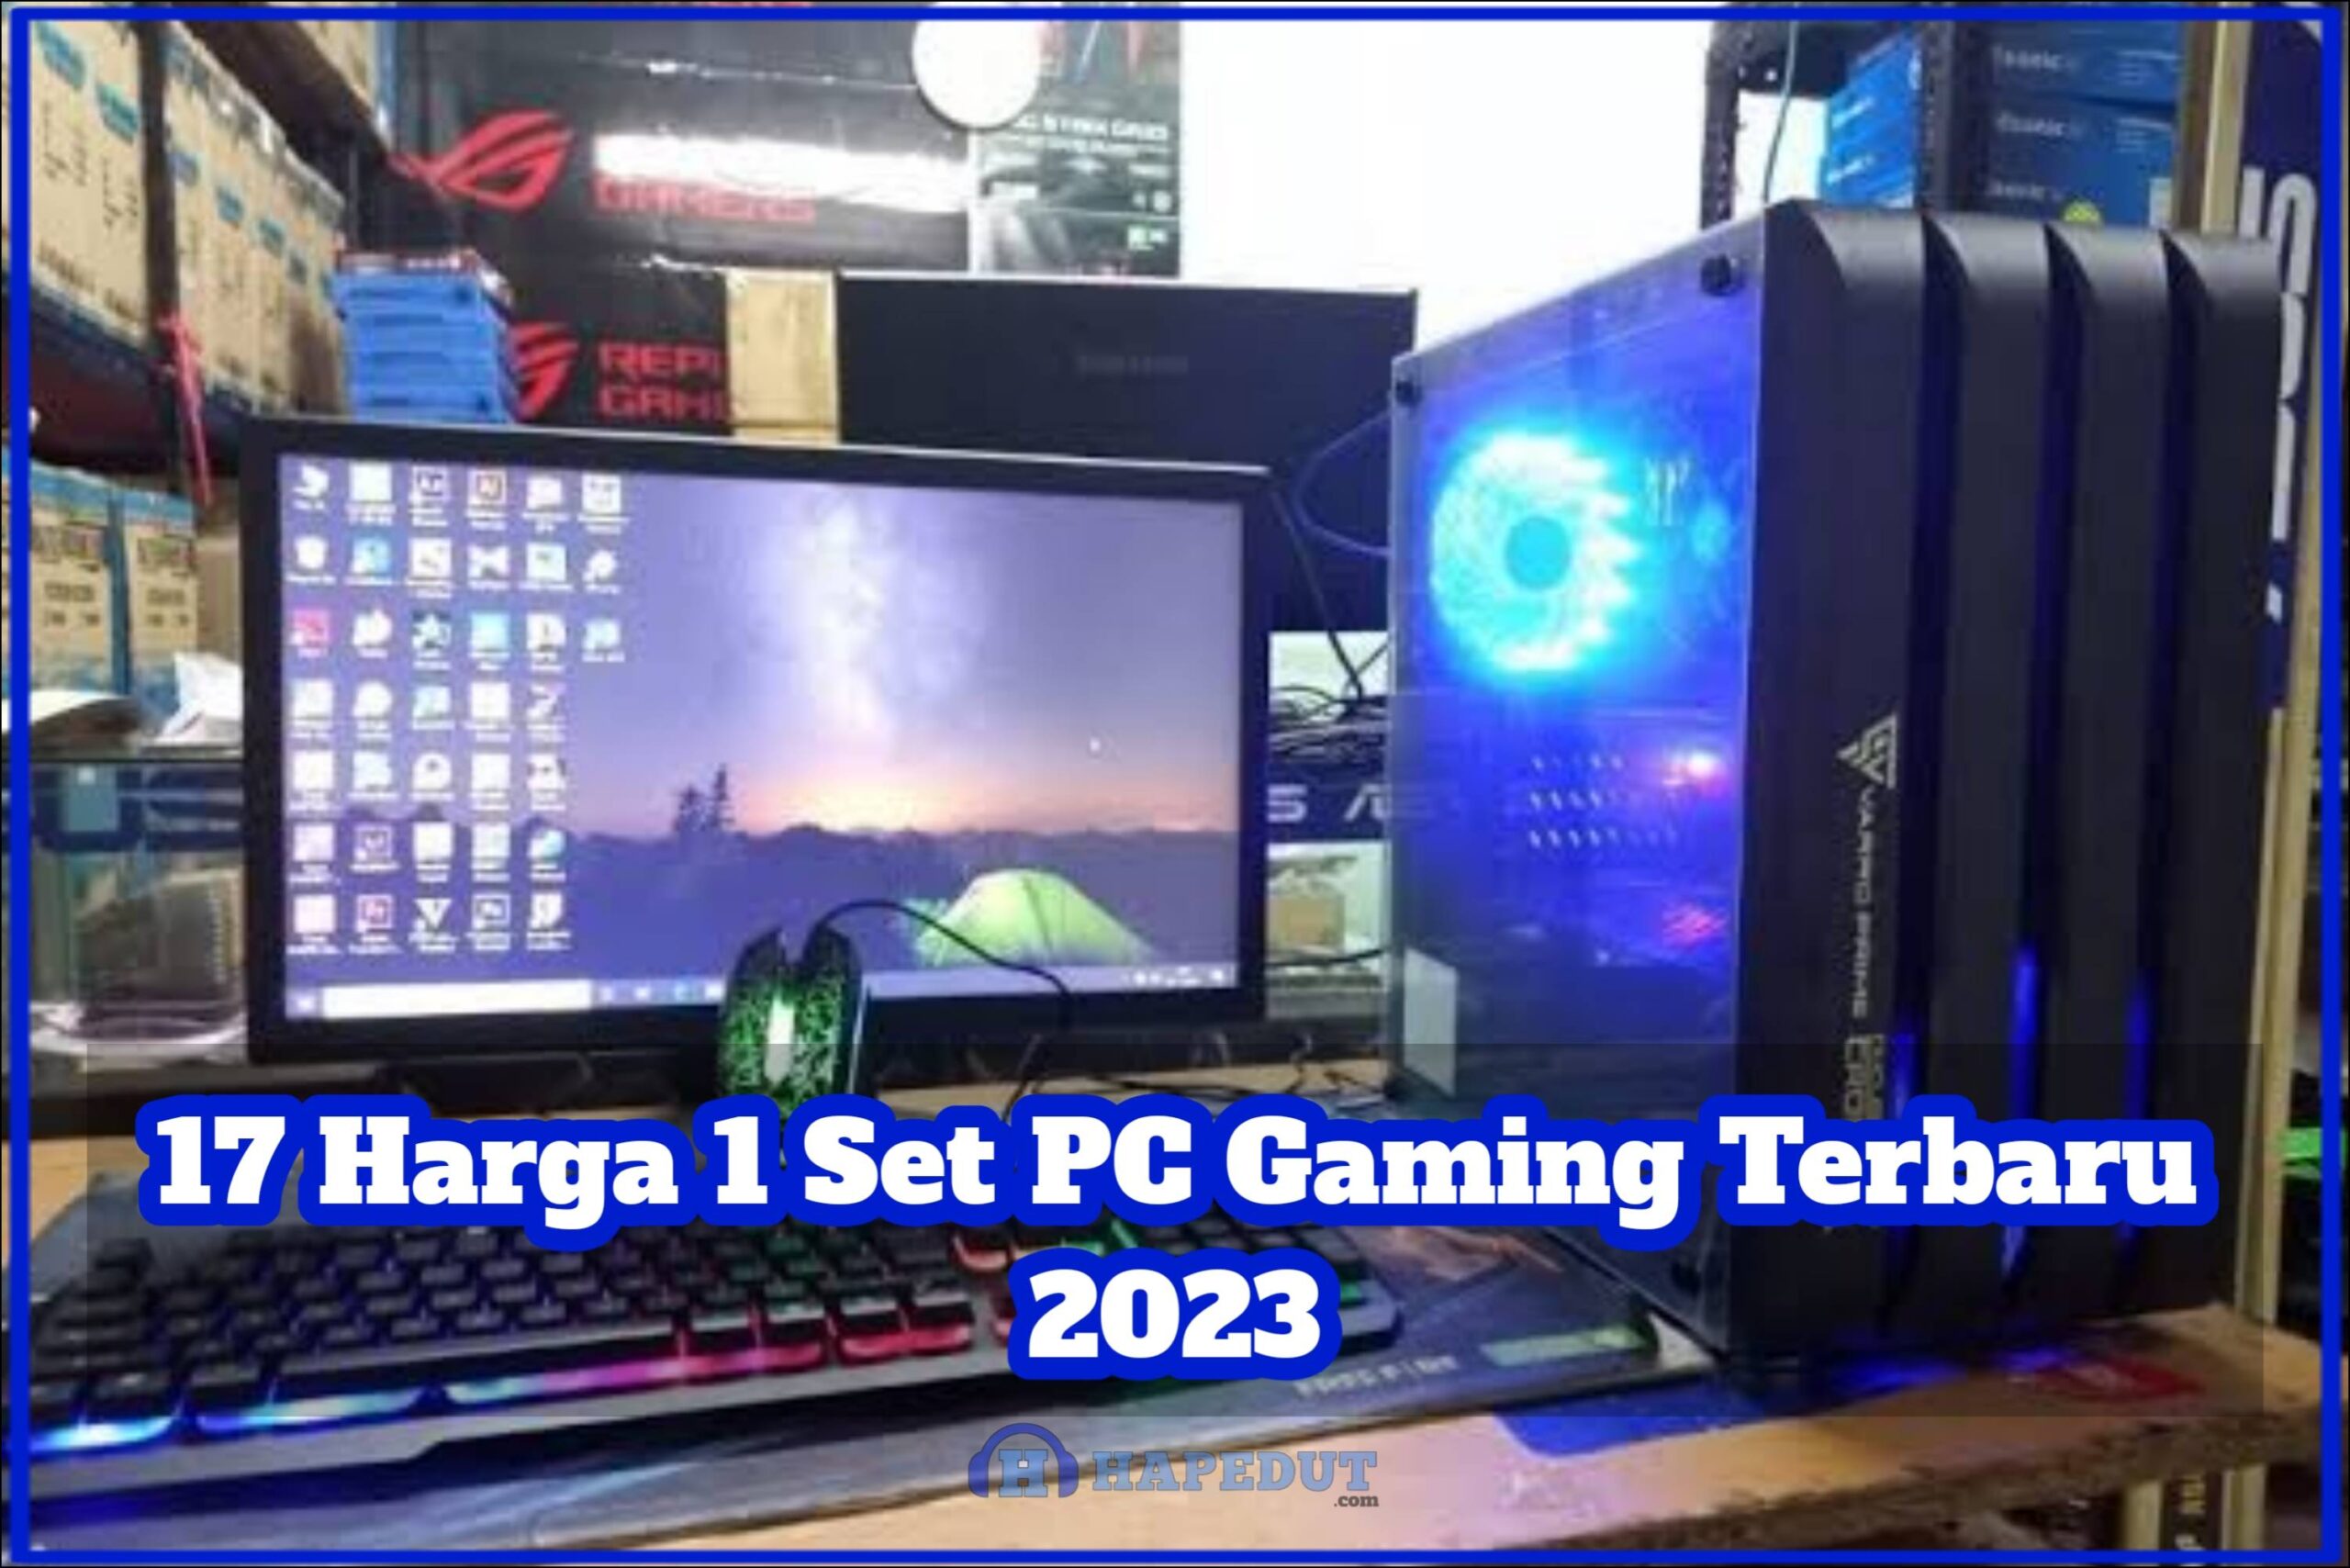 17 Harga 1 Set PC Gaming Terbaru 2023